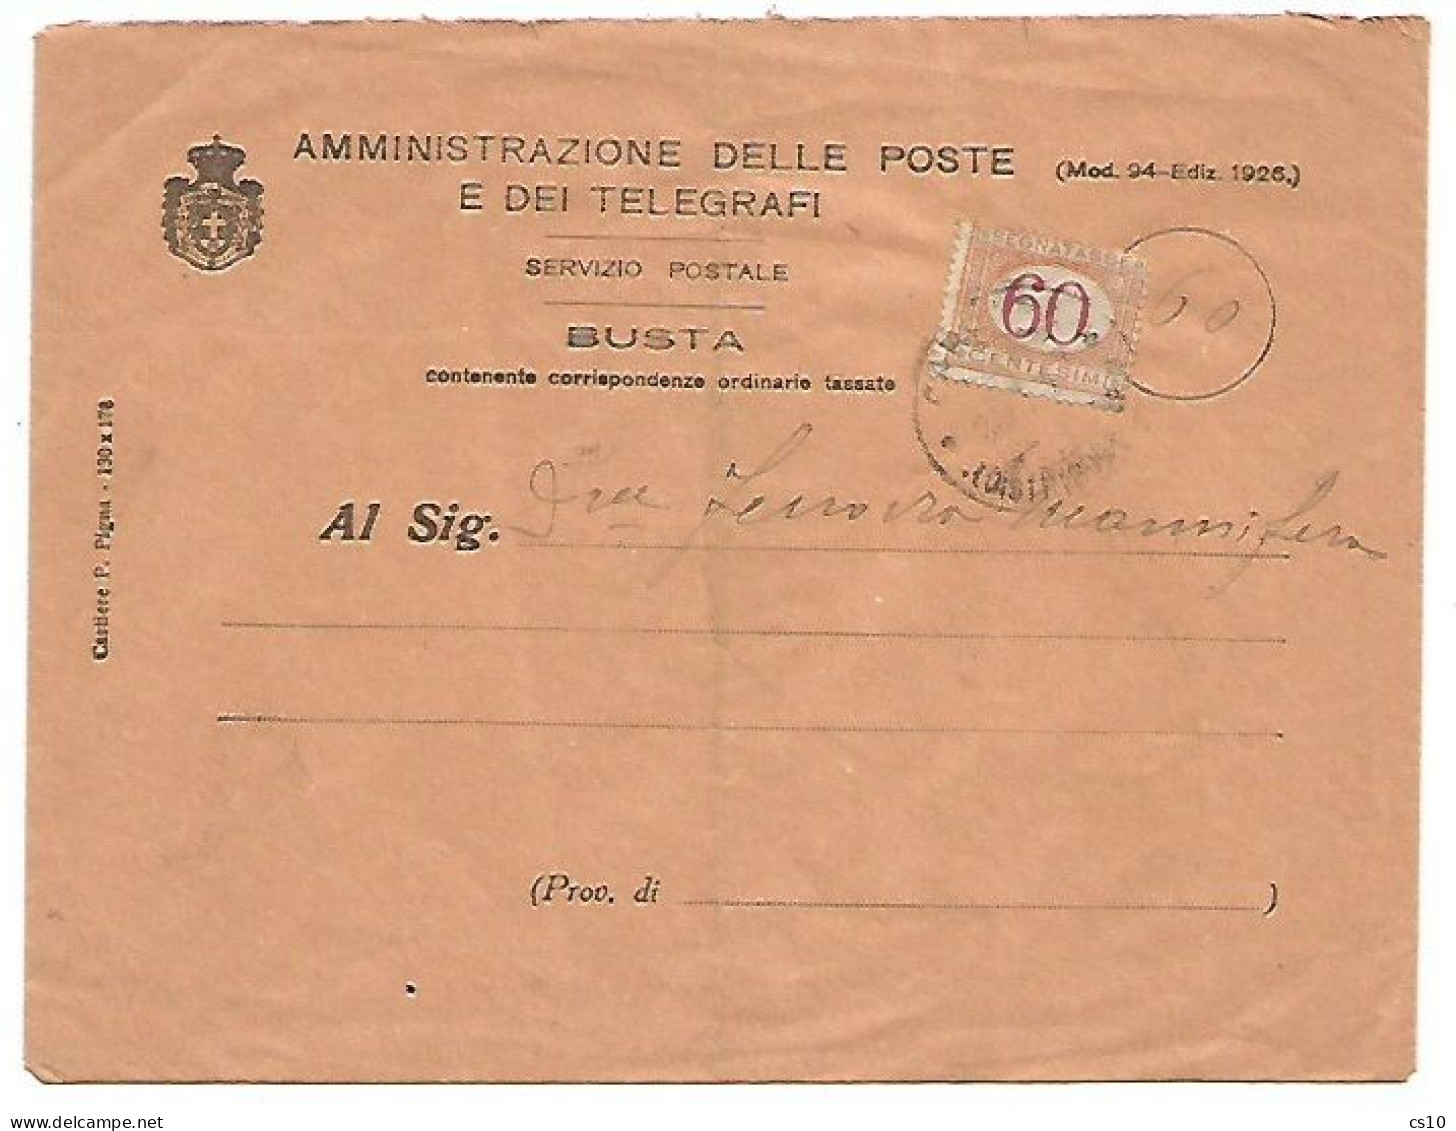 SegnaTasse Cifra Carminio C.60 #26 Isolato TC Busta Amm.PPTT Carrara 1926 X Ferrovia Marmifera - Segnatasse